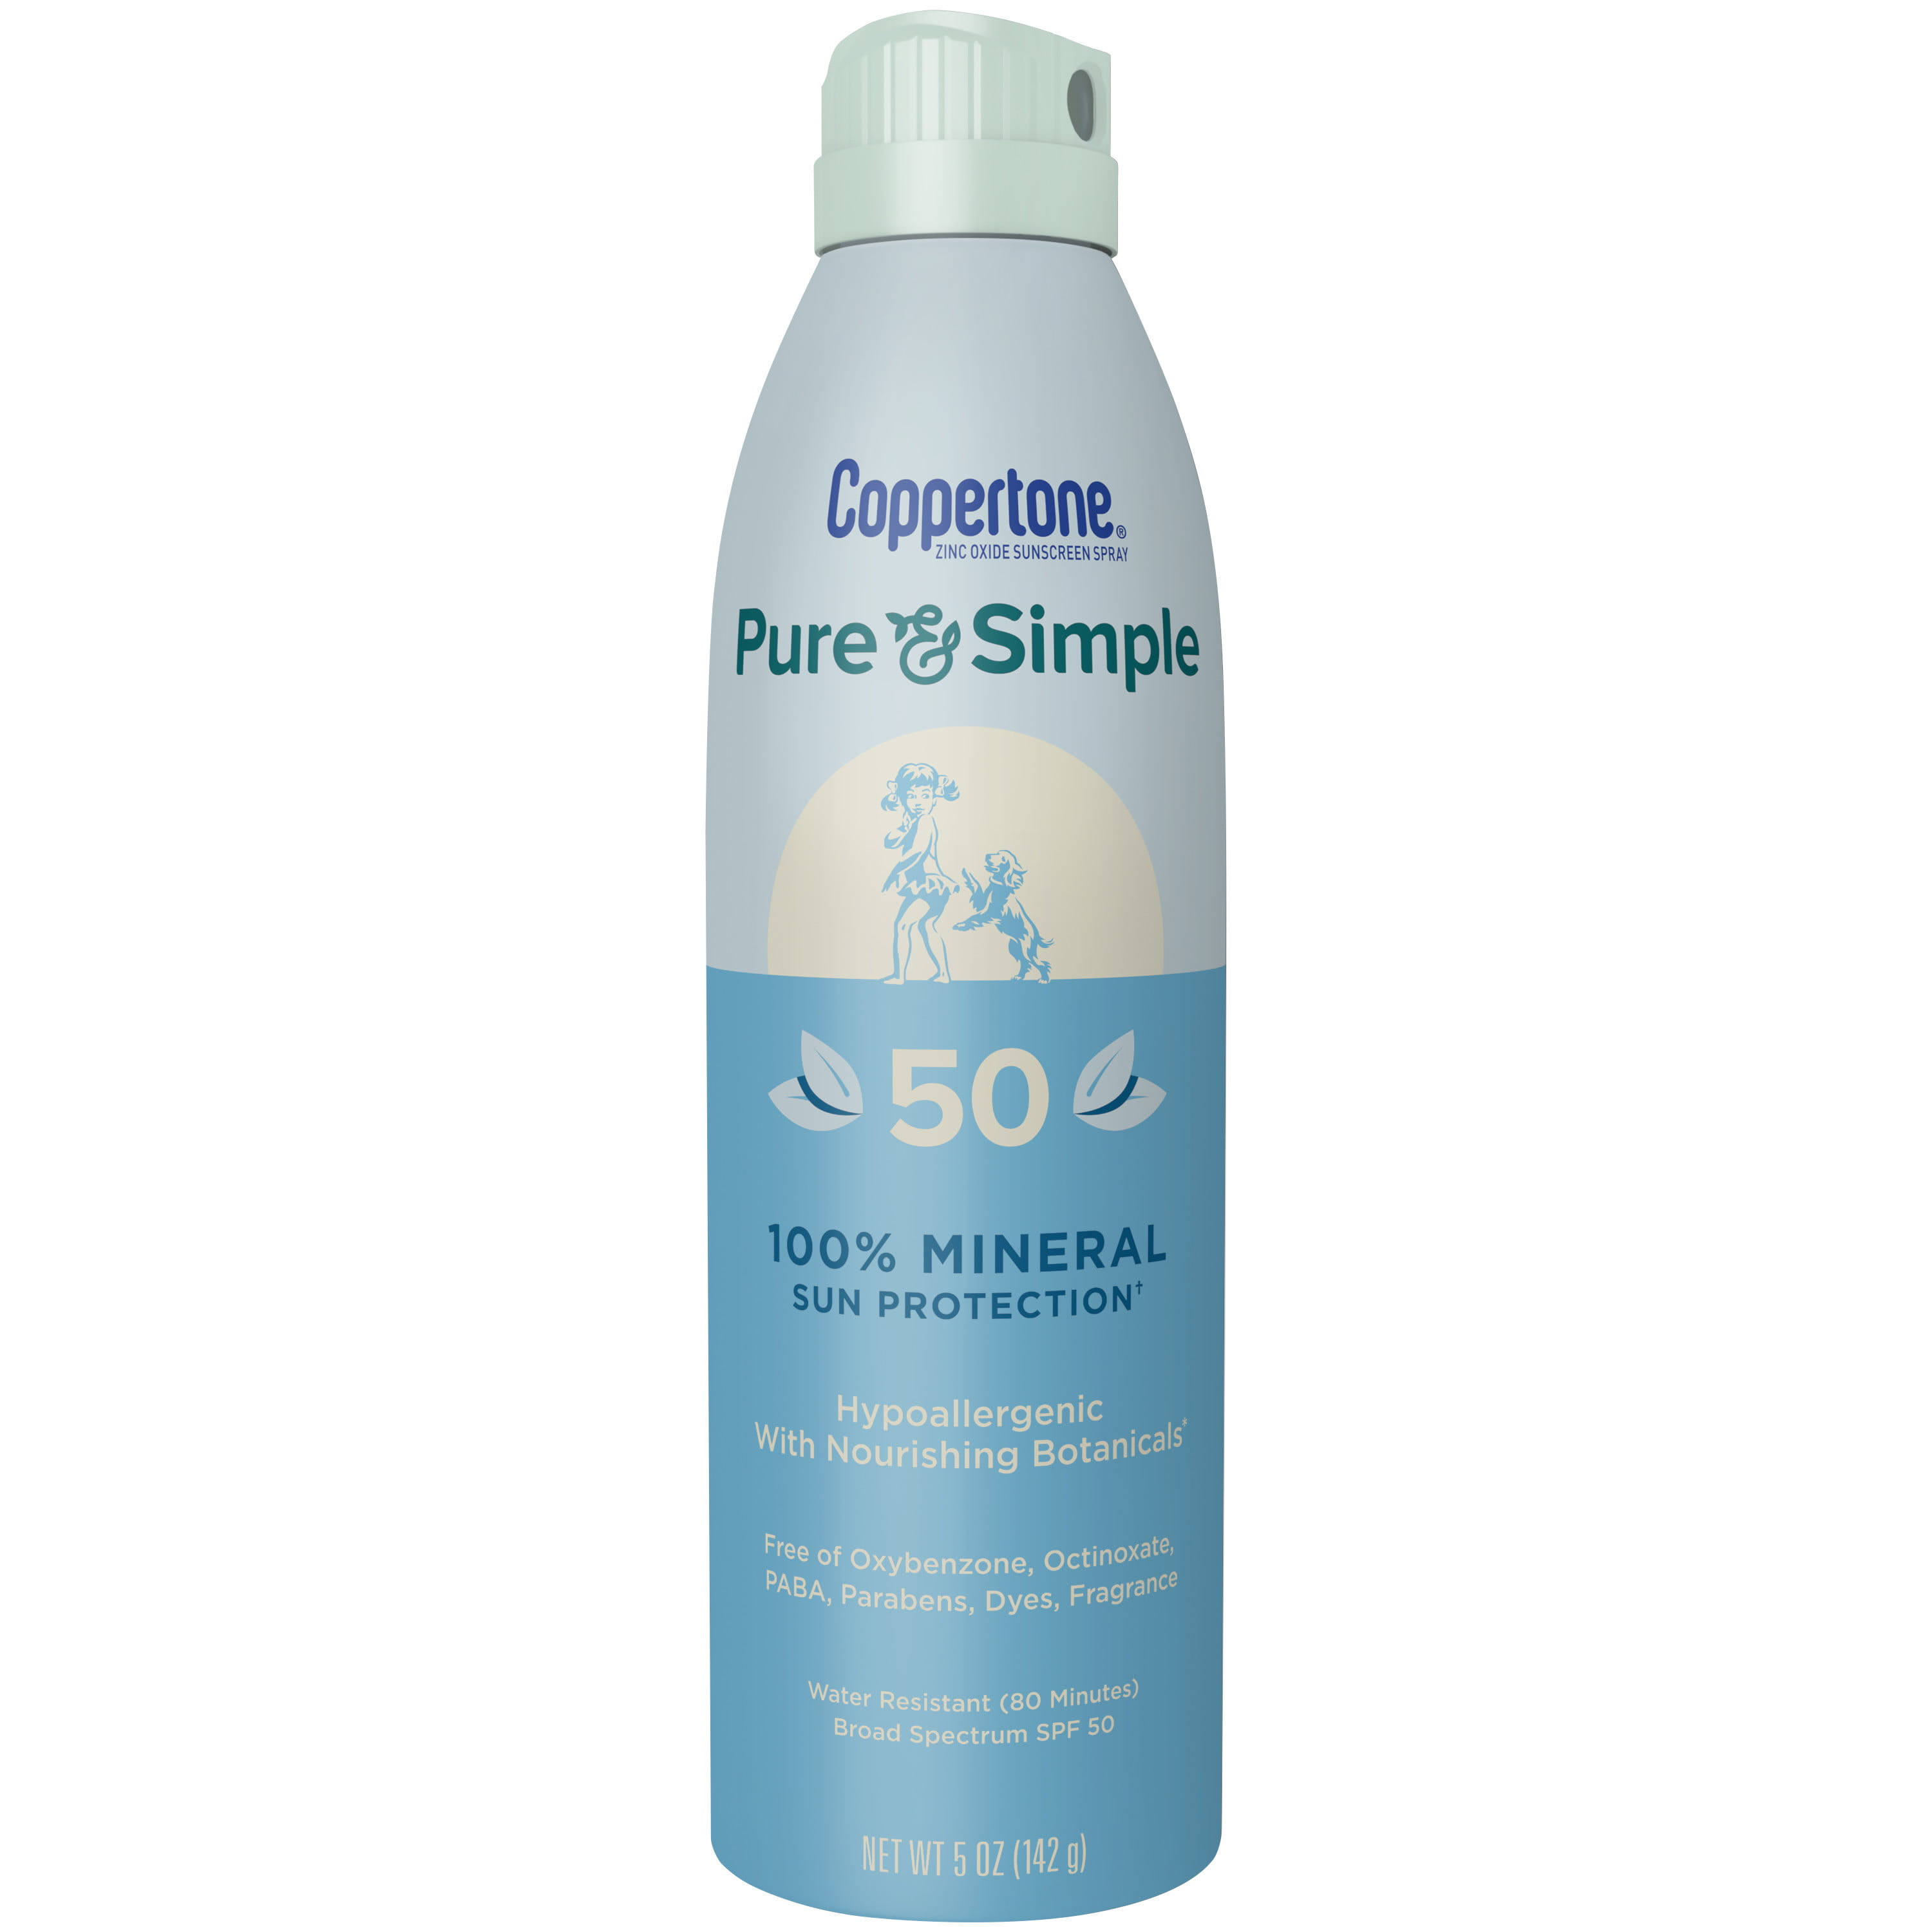 Coppertone Pure & Simple SPF 50 Sunscreen Spray - 5 oz